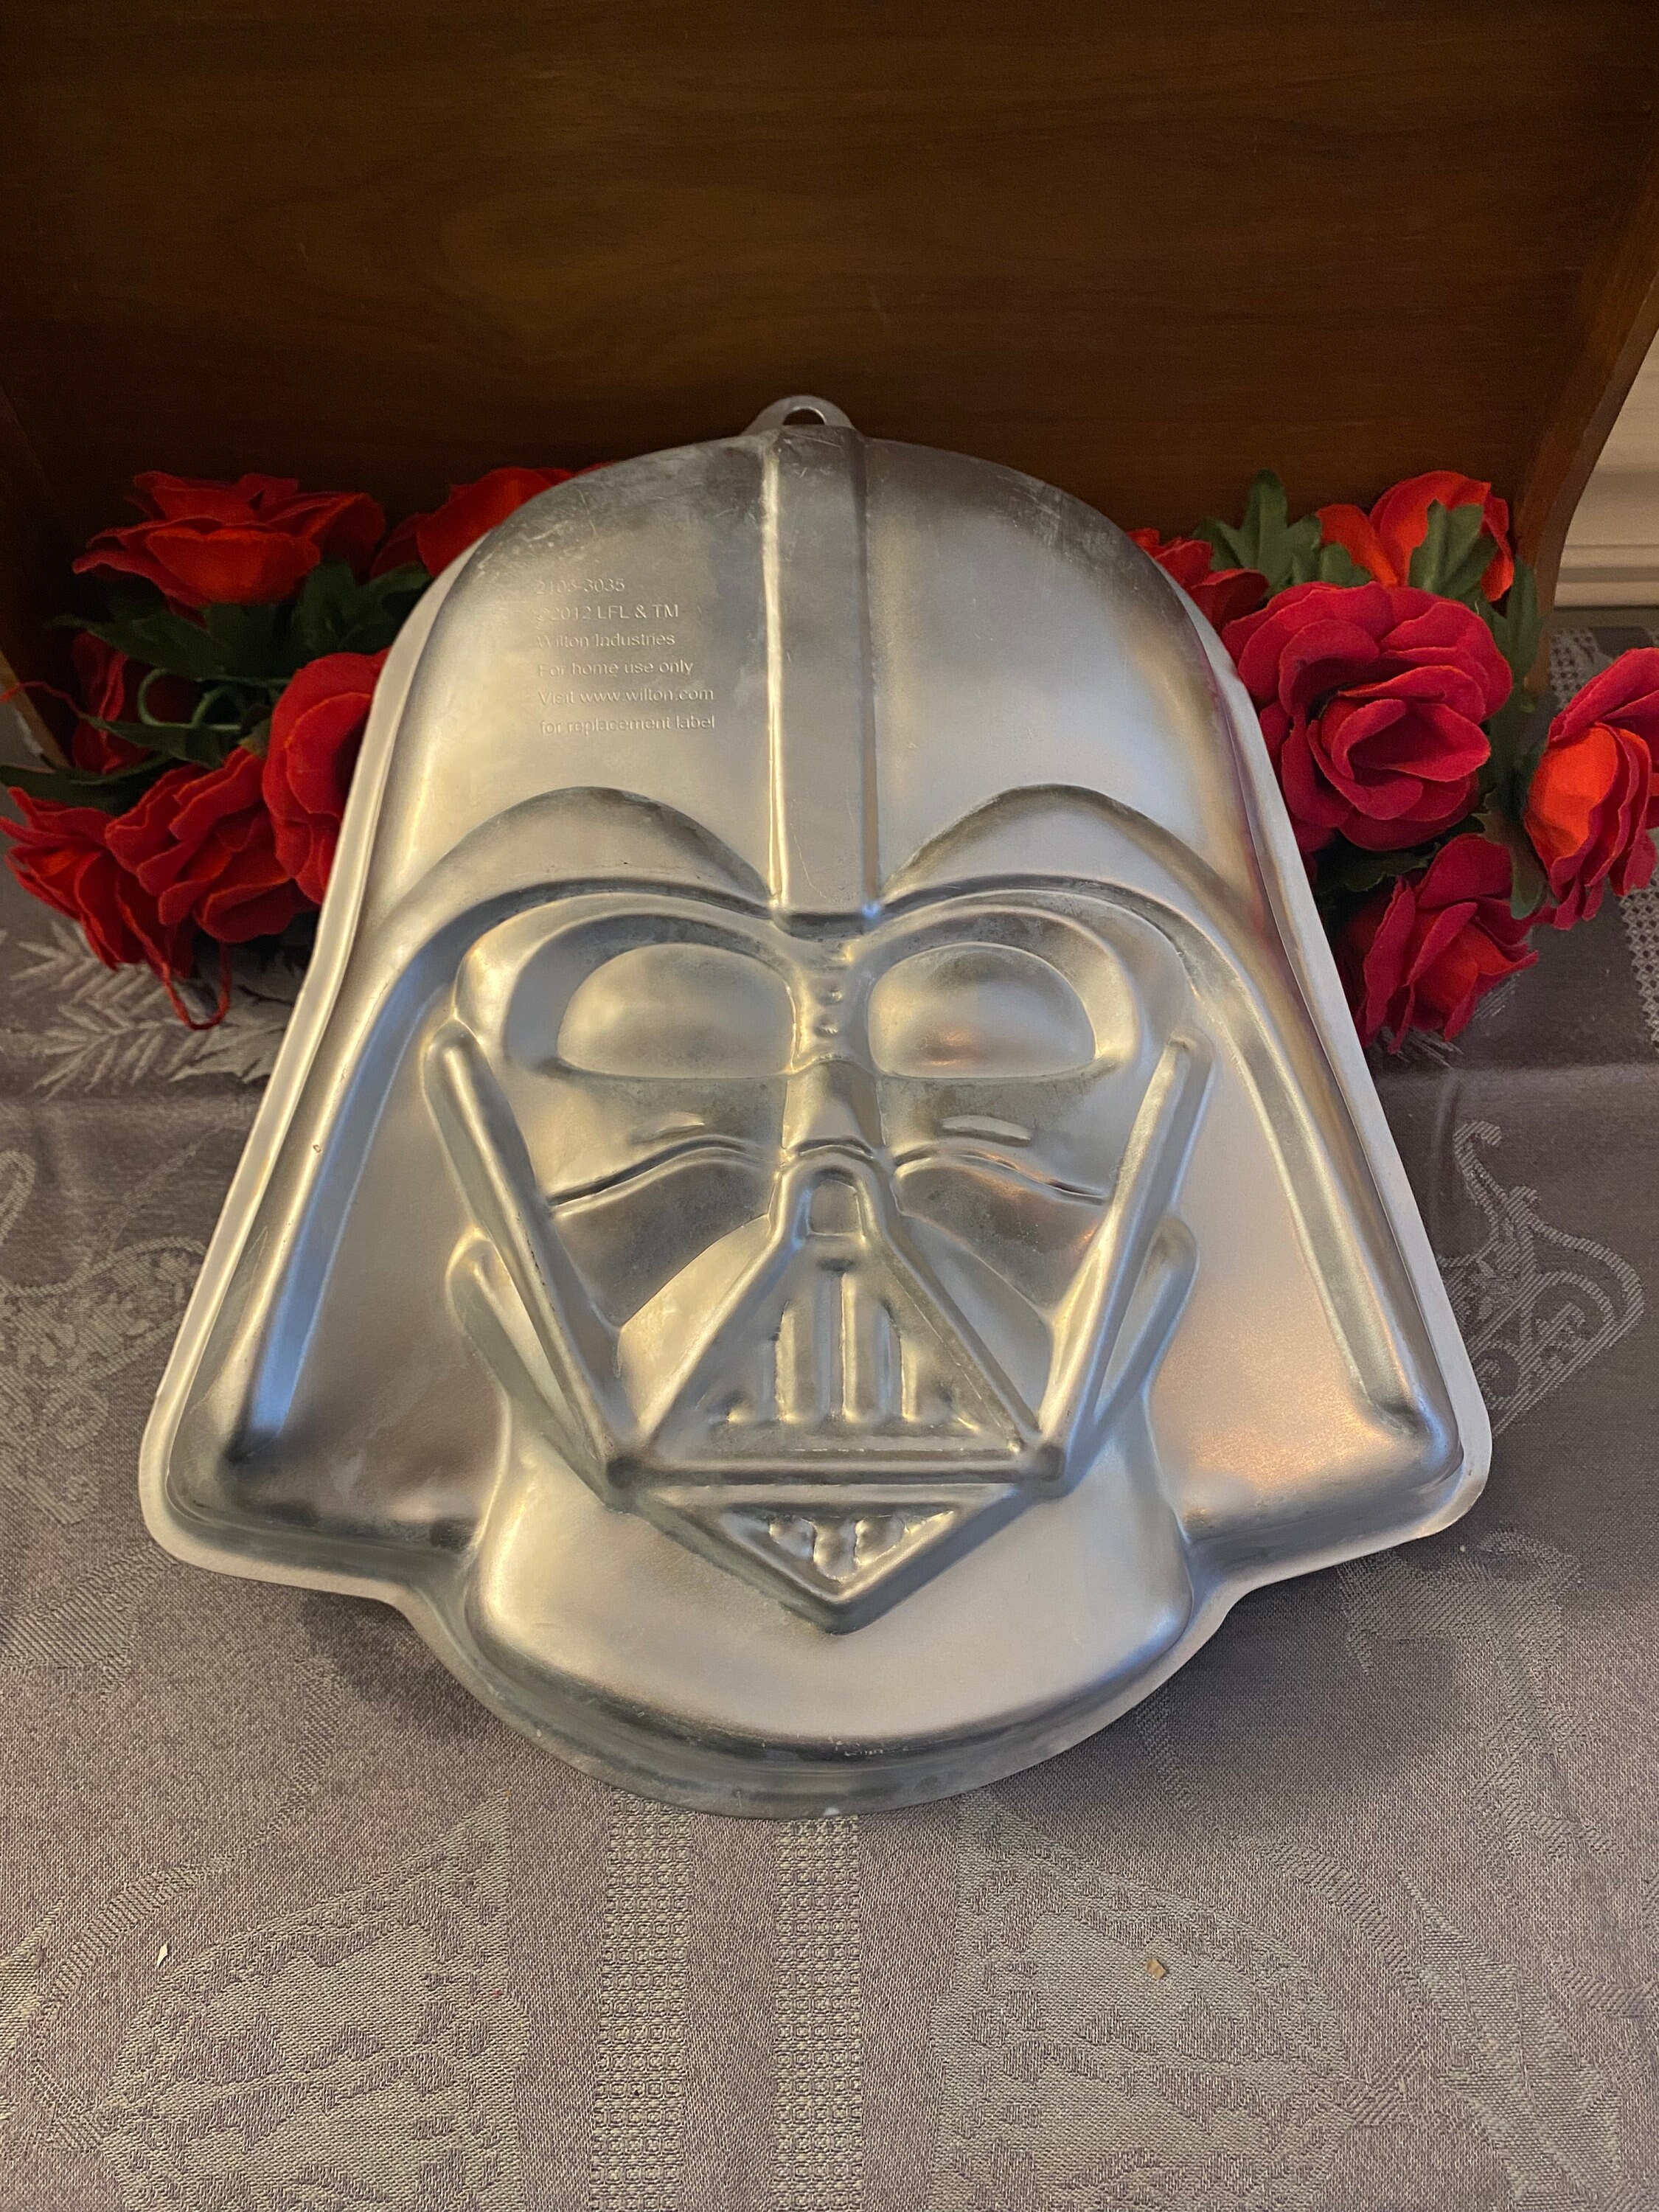 Wilton Star Wars cake pans & decorations (1980s) - Click Americana